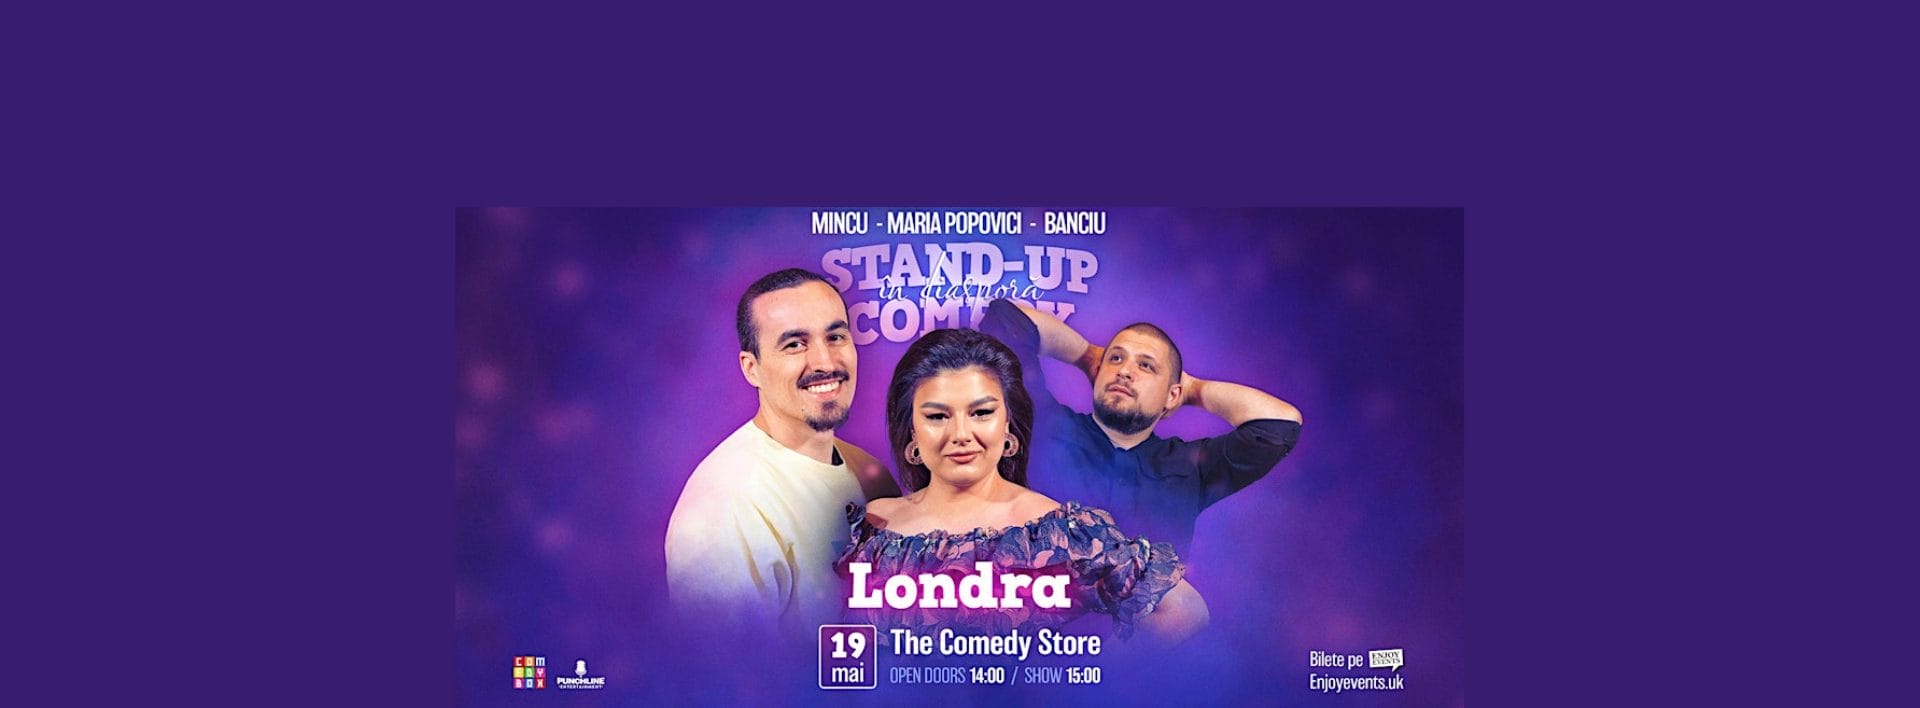 Stand-up Comedy în Diasporă cu Mincu, Maria și Banciu